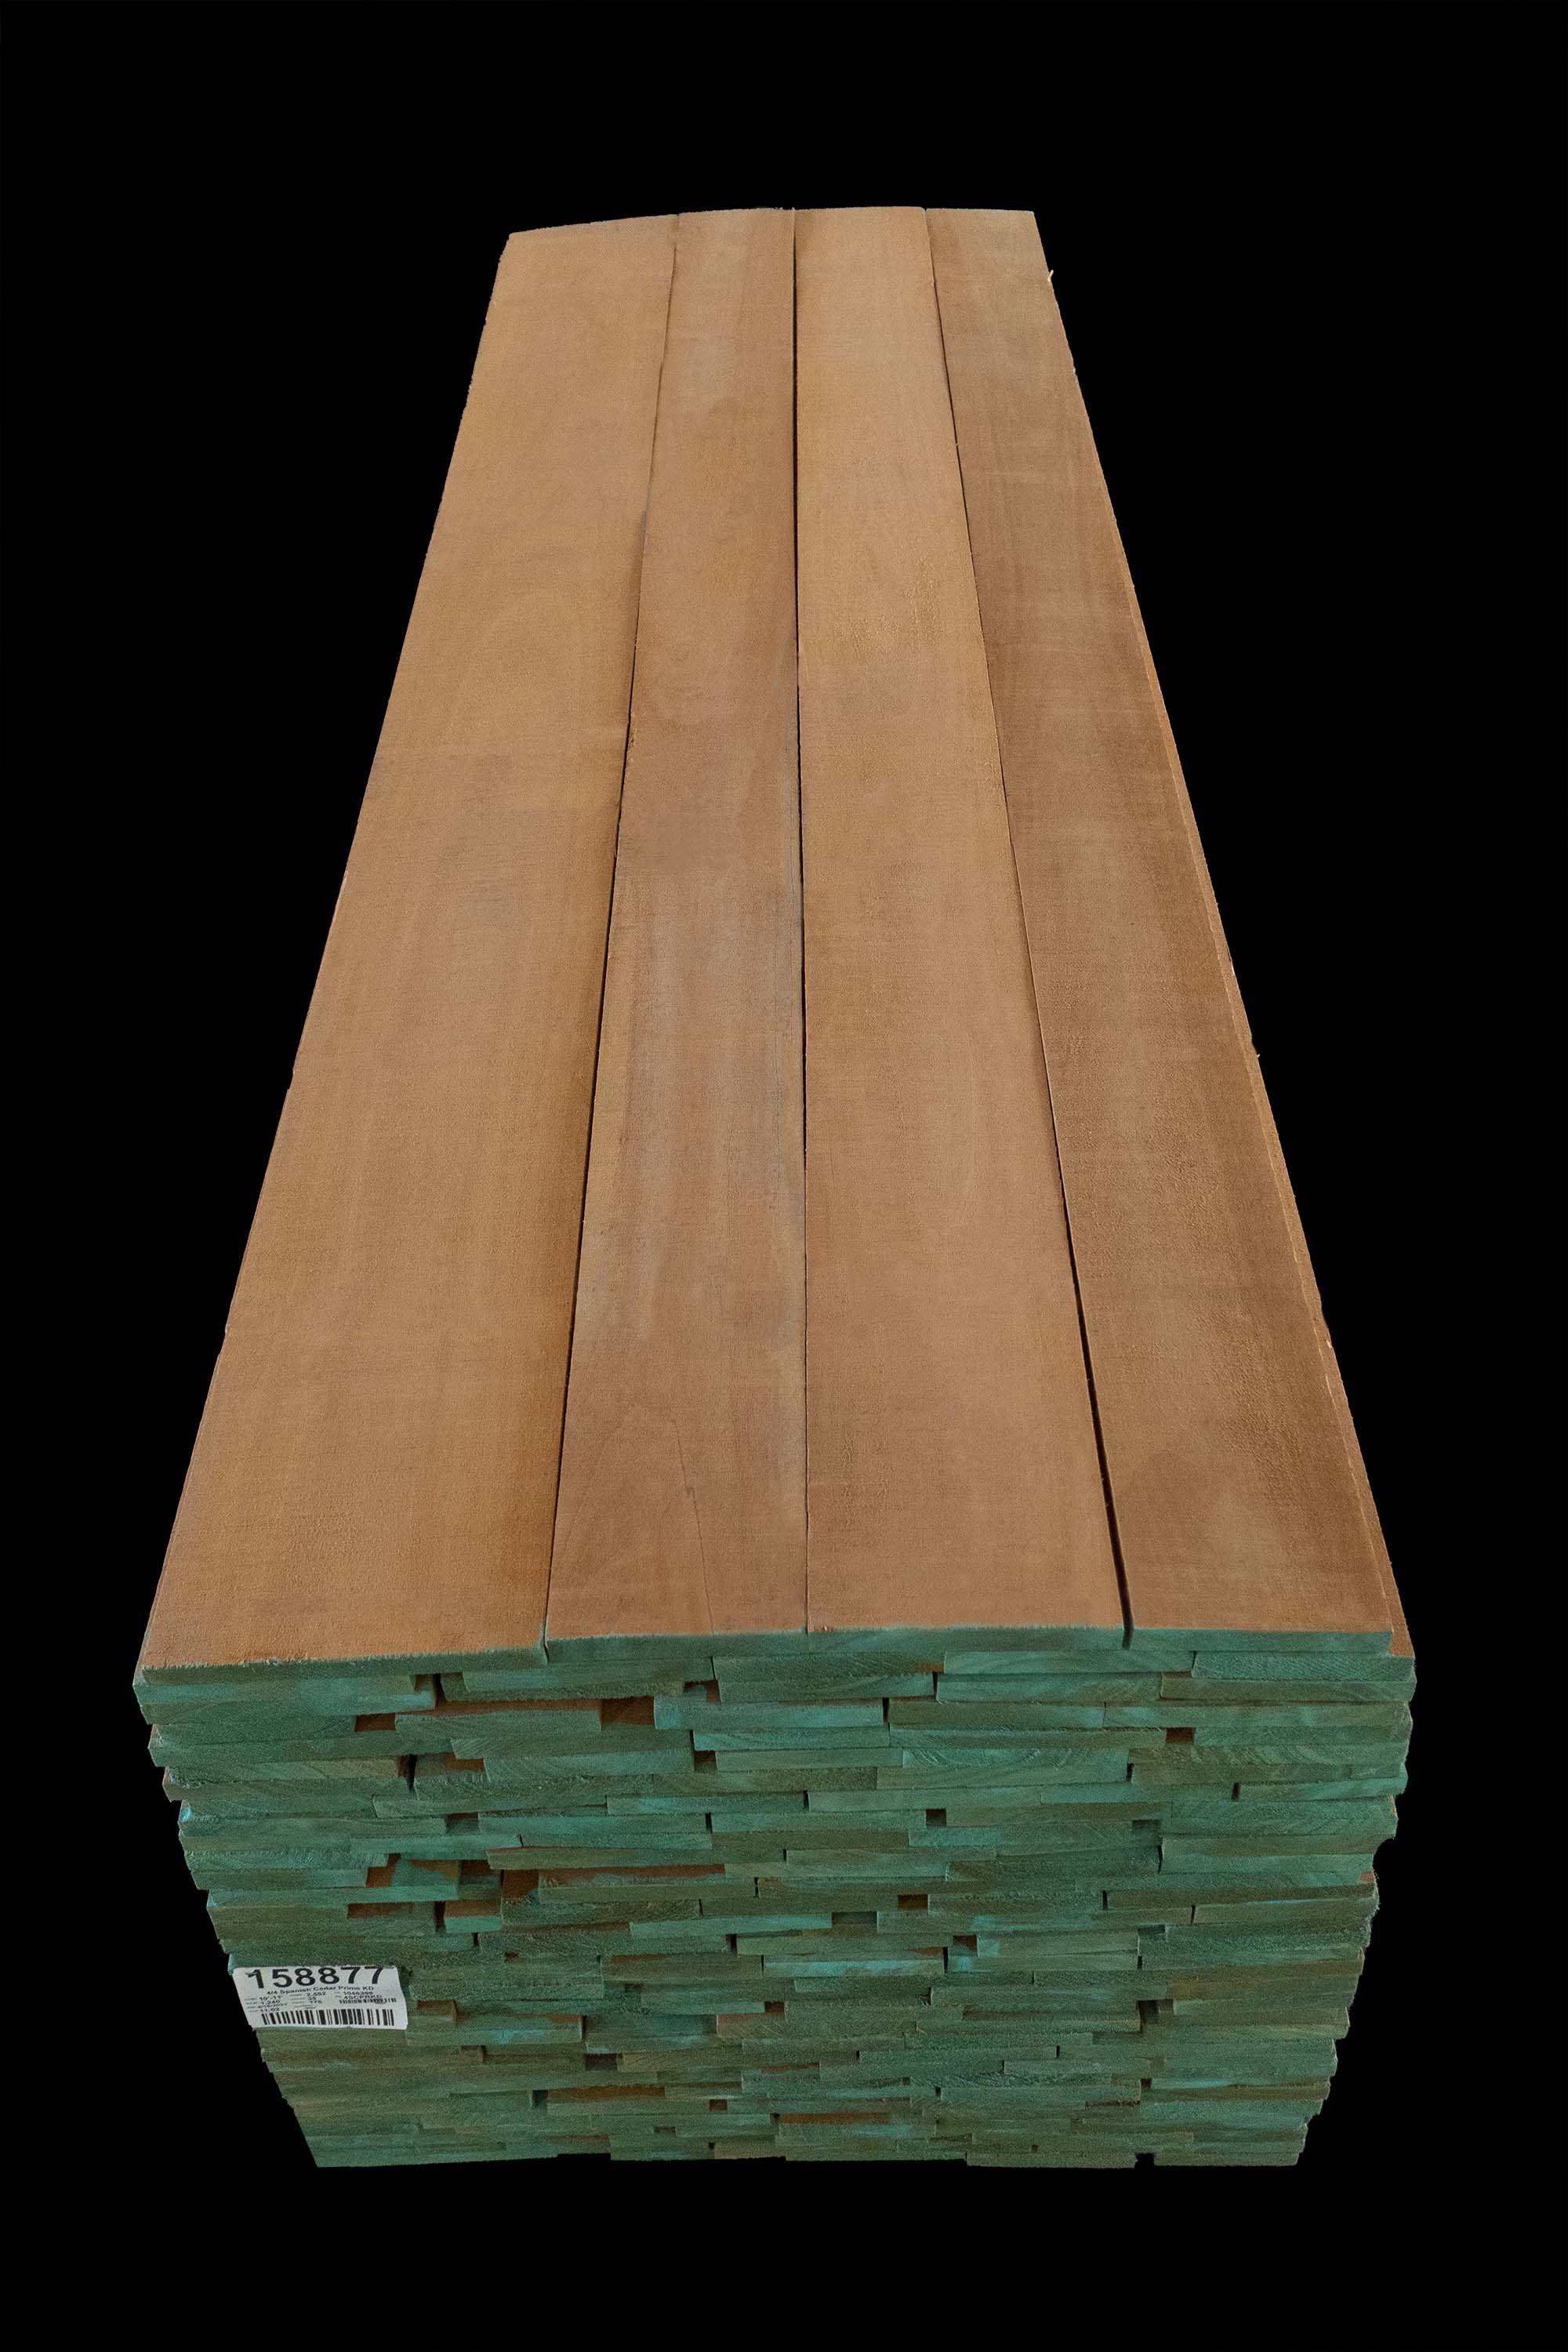 Logs - Baillie Lumber - Hardwood Supplier